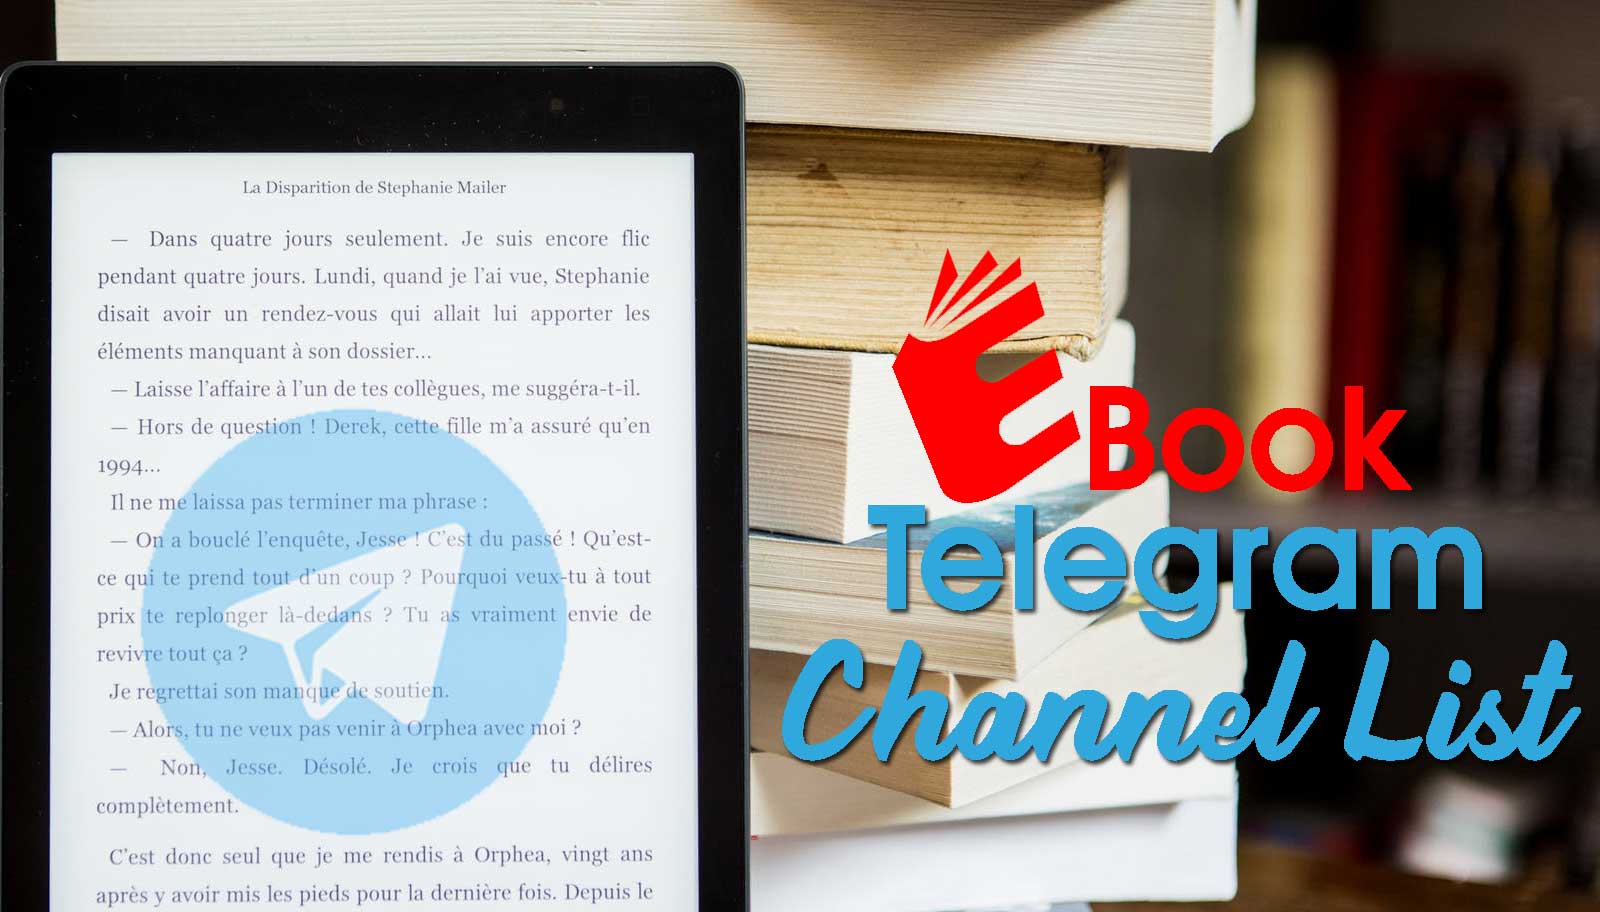 Books Telegram Channels List